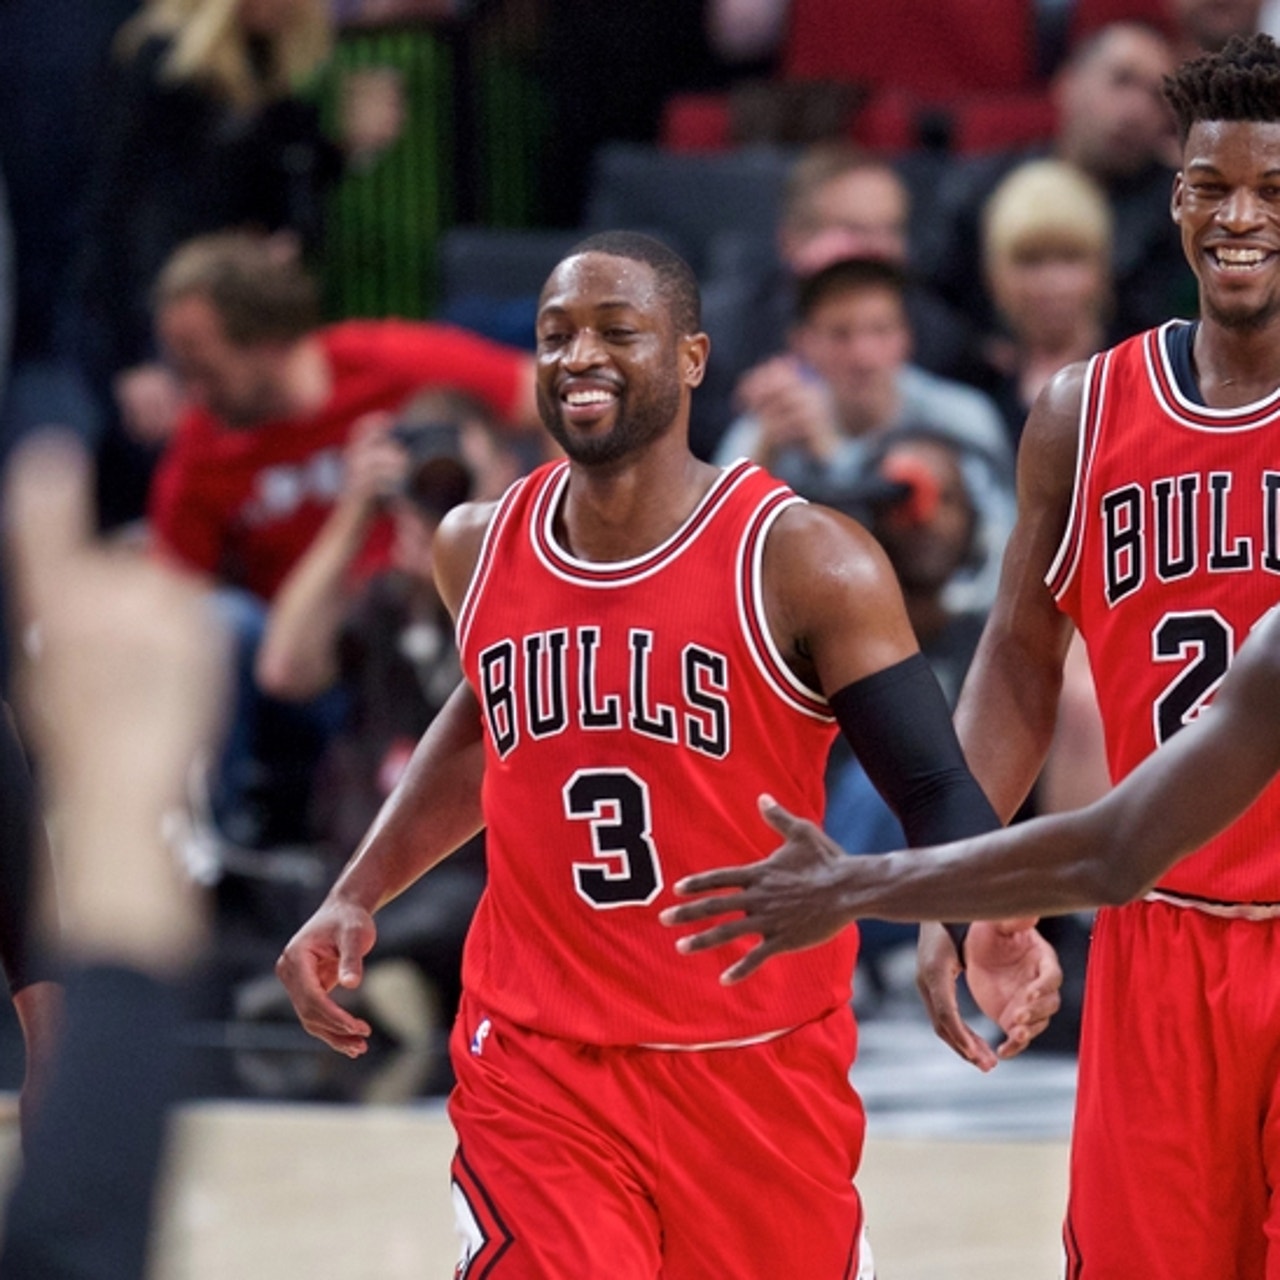 Why Dwyane Wade's Chicago Bulls Debut Matters